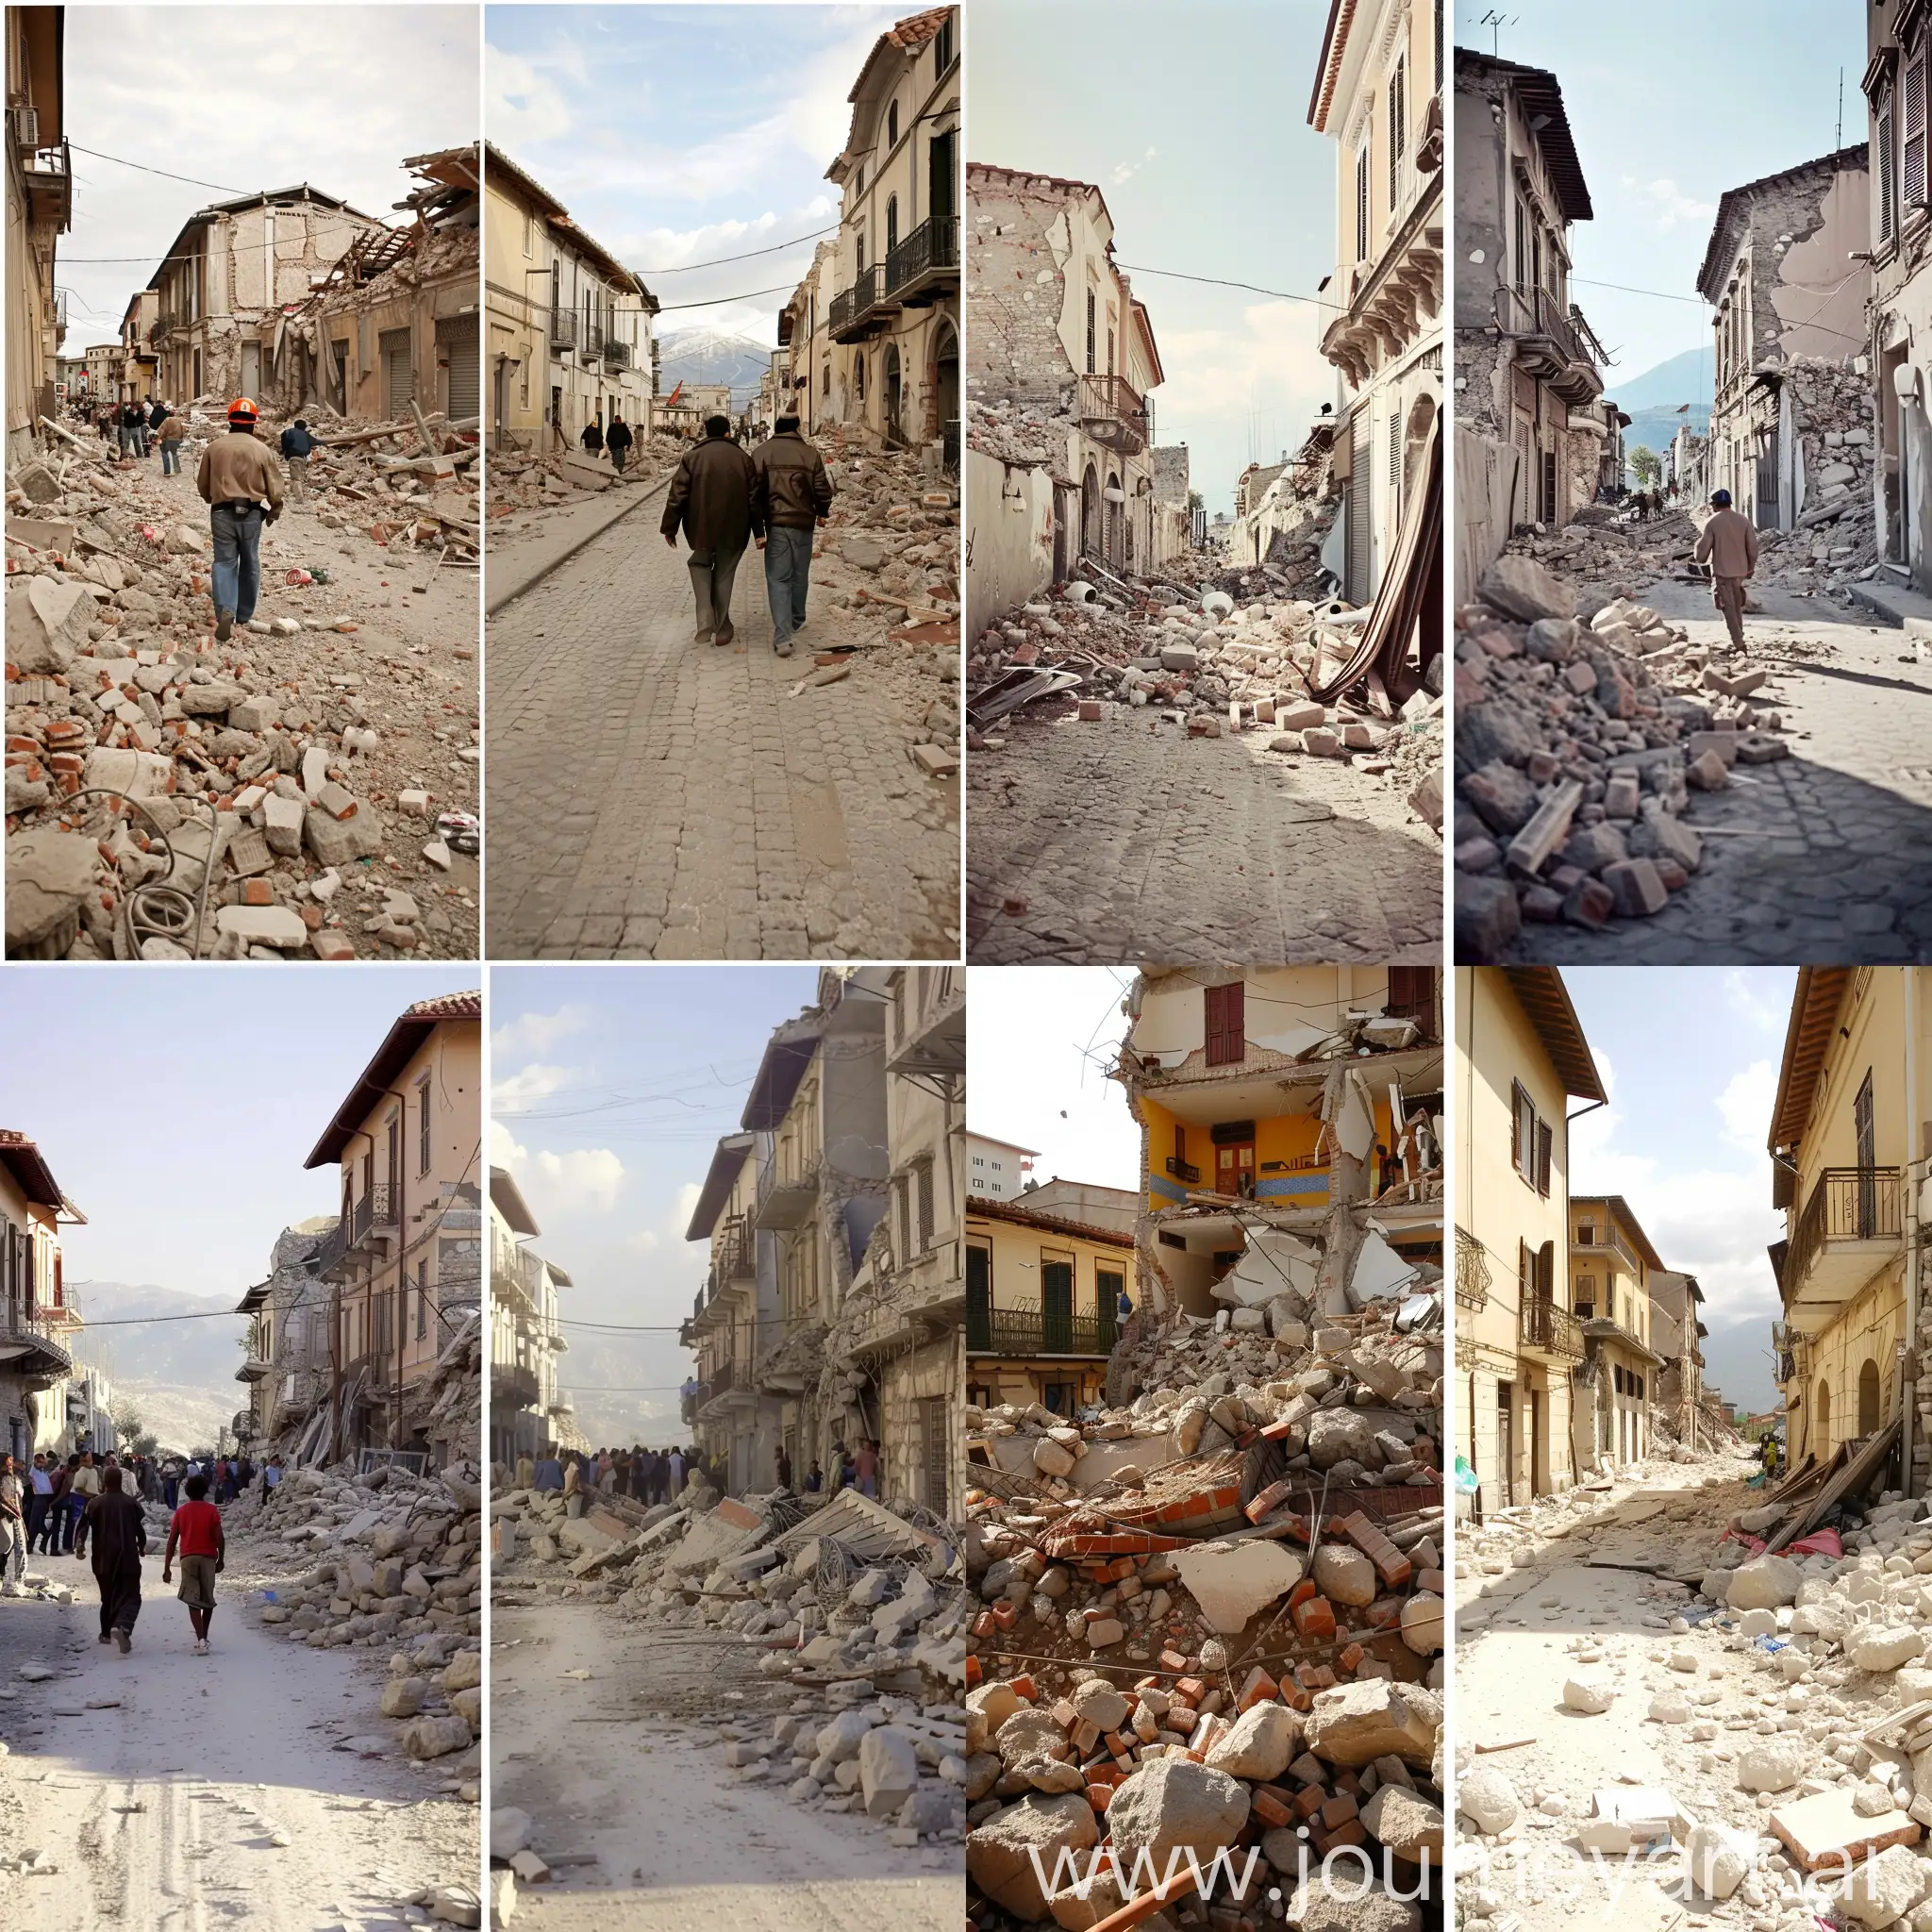 Devastation-and-Hope-LAquila-2009-and-Haiti-2010-Earthquake-Effects